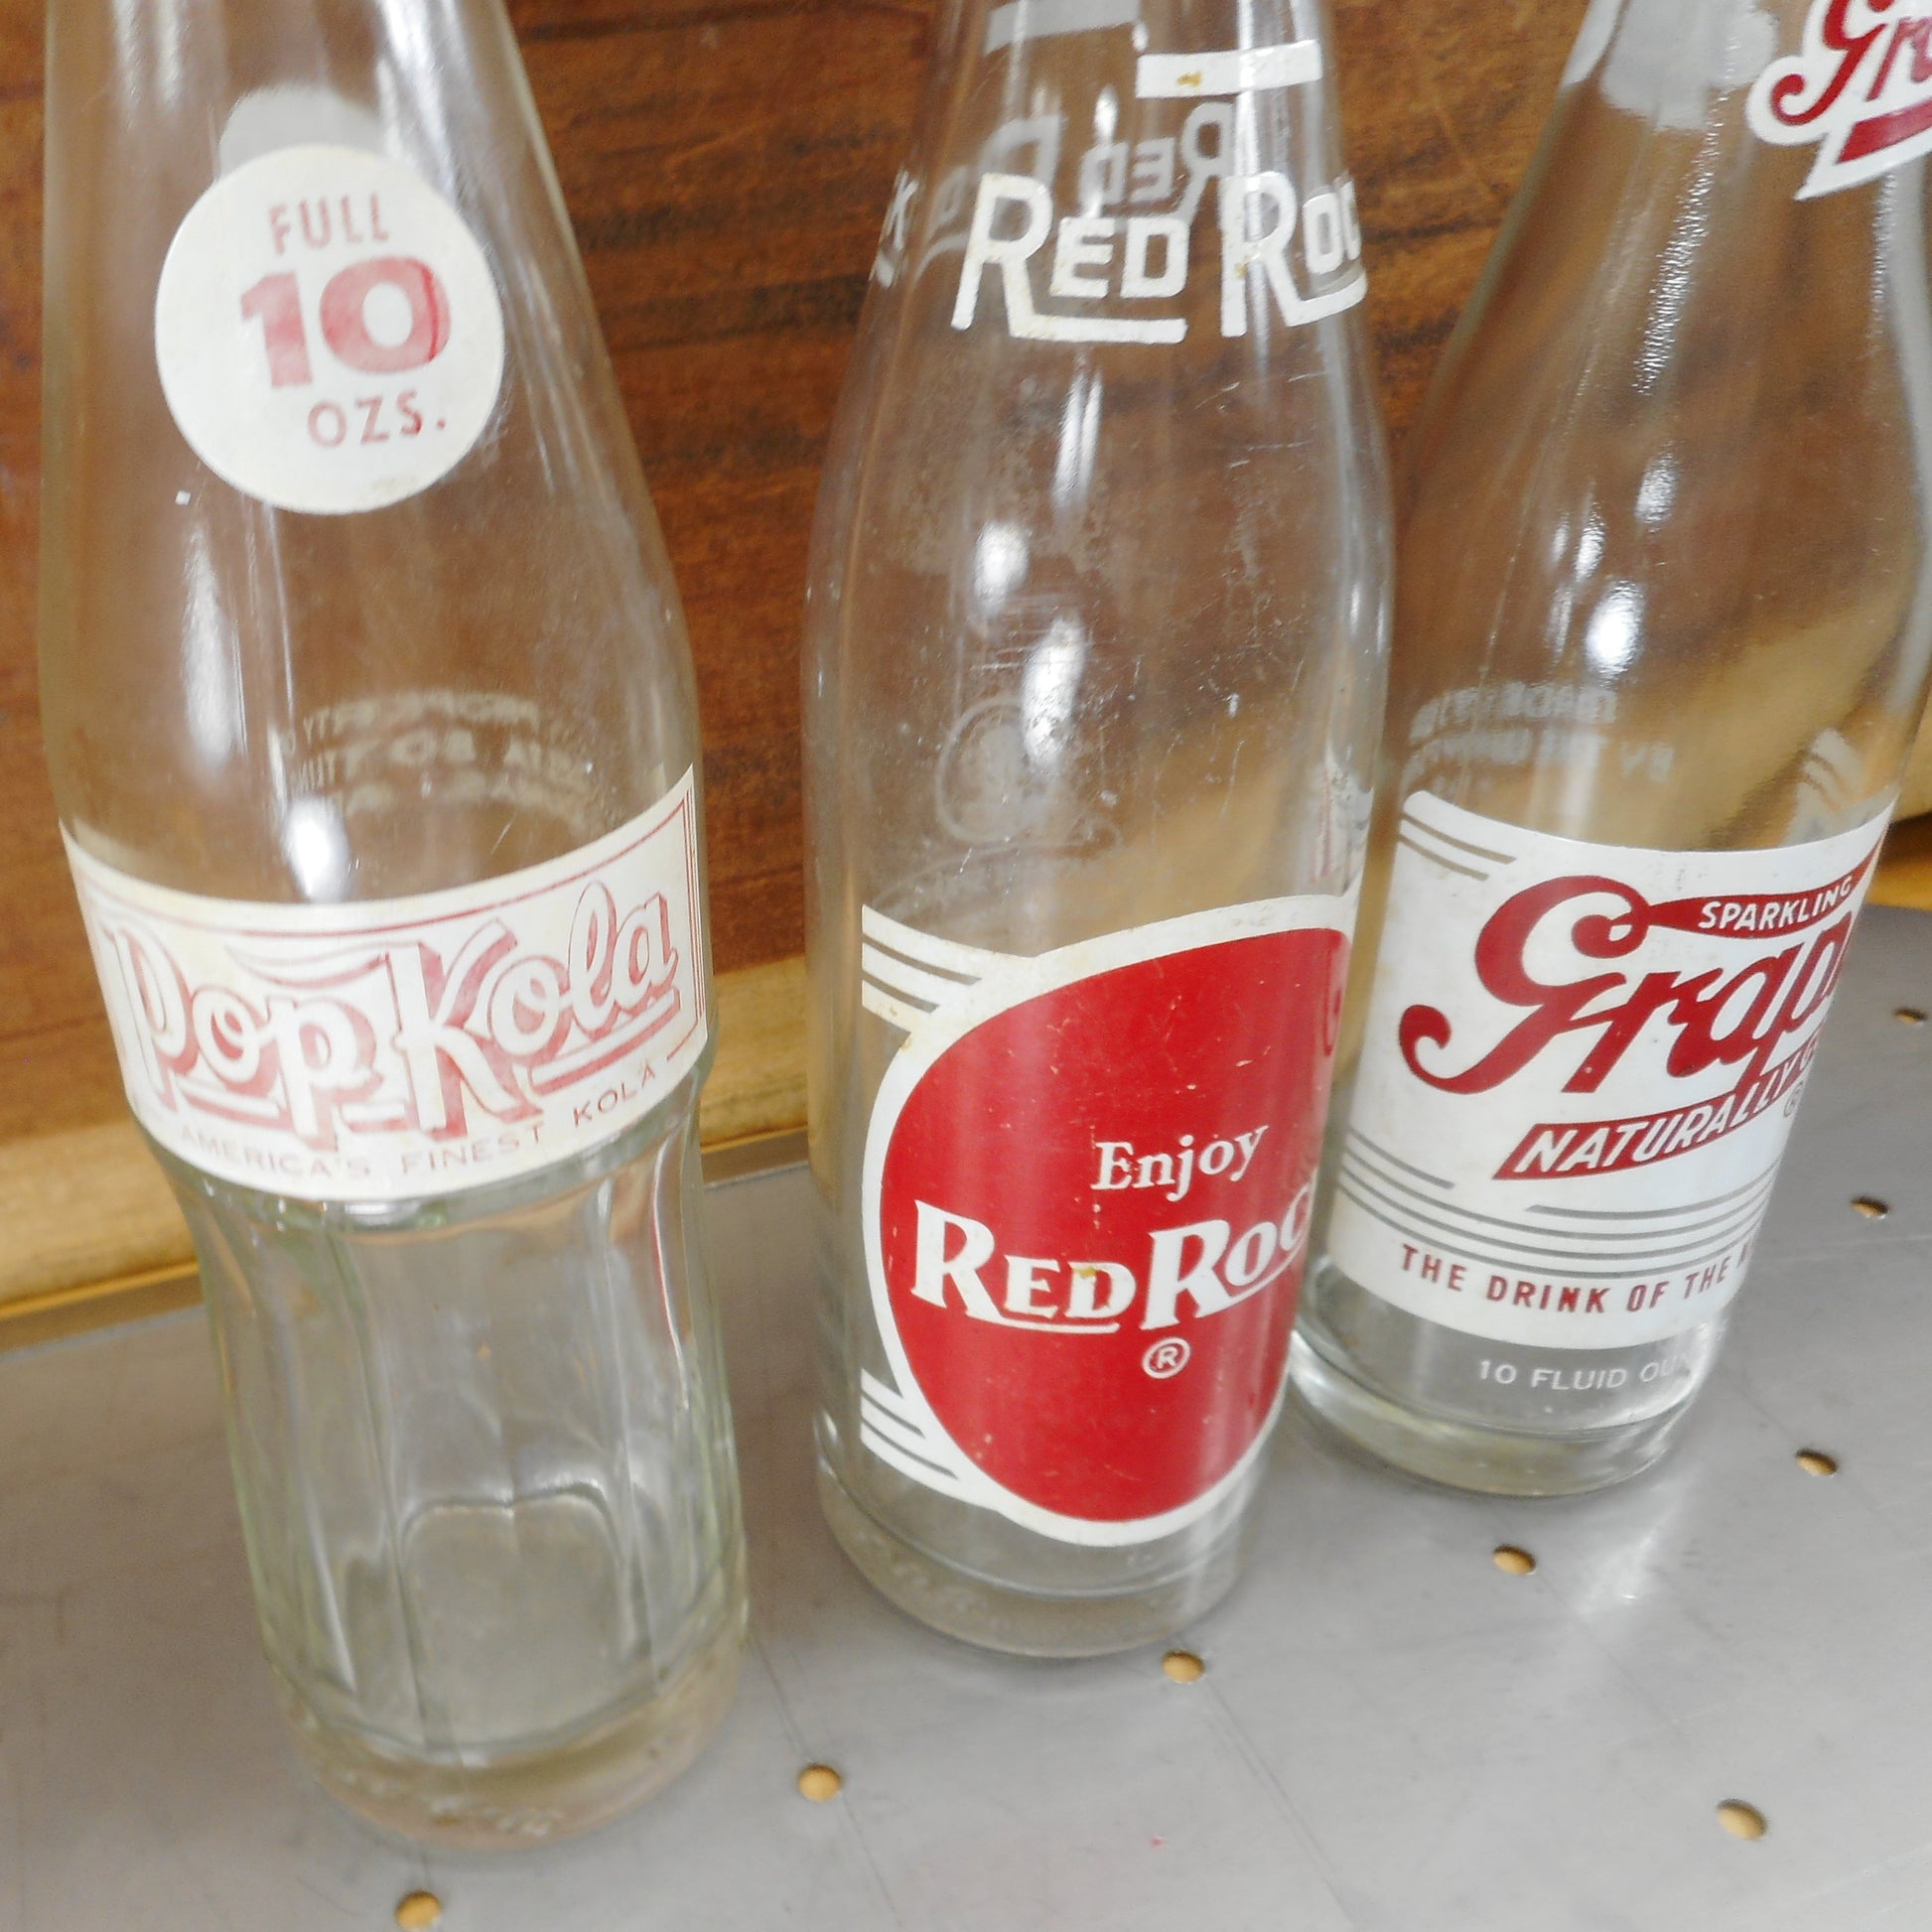 Soda Pop Bottles - Pop Kola, Red Rock, Grapico 10 oz. Red White